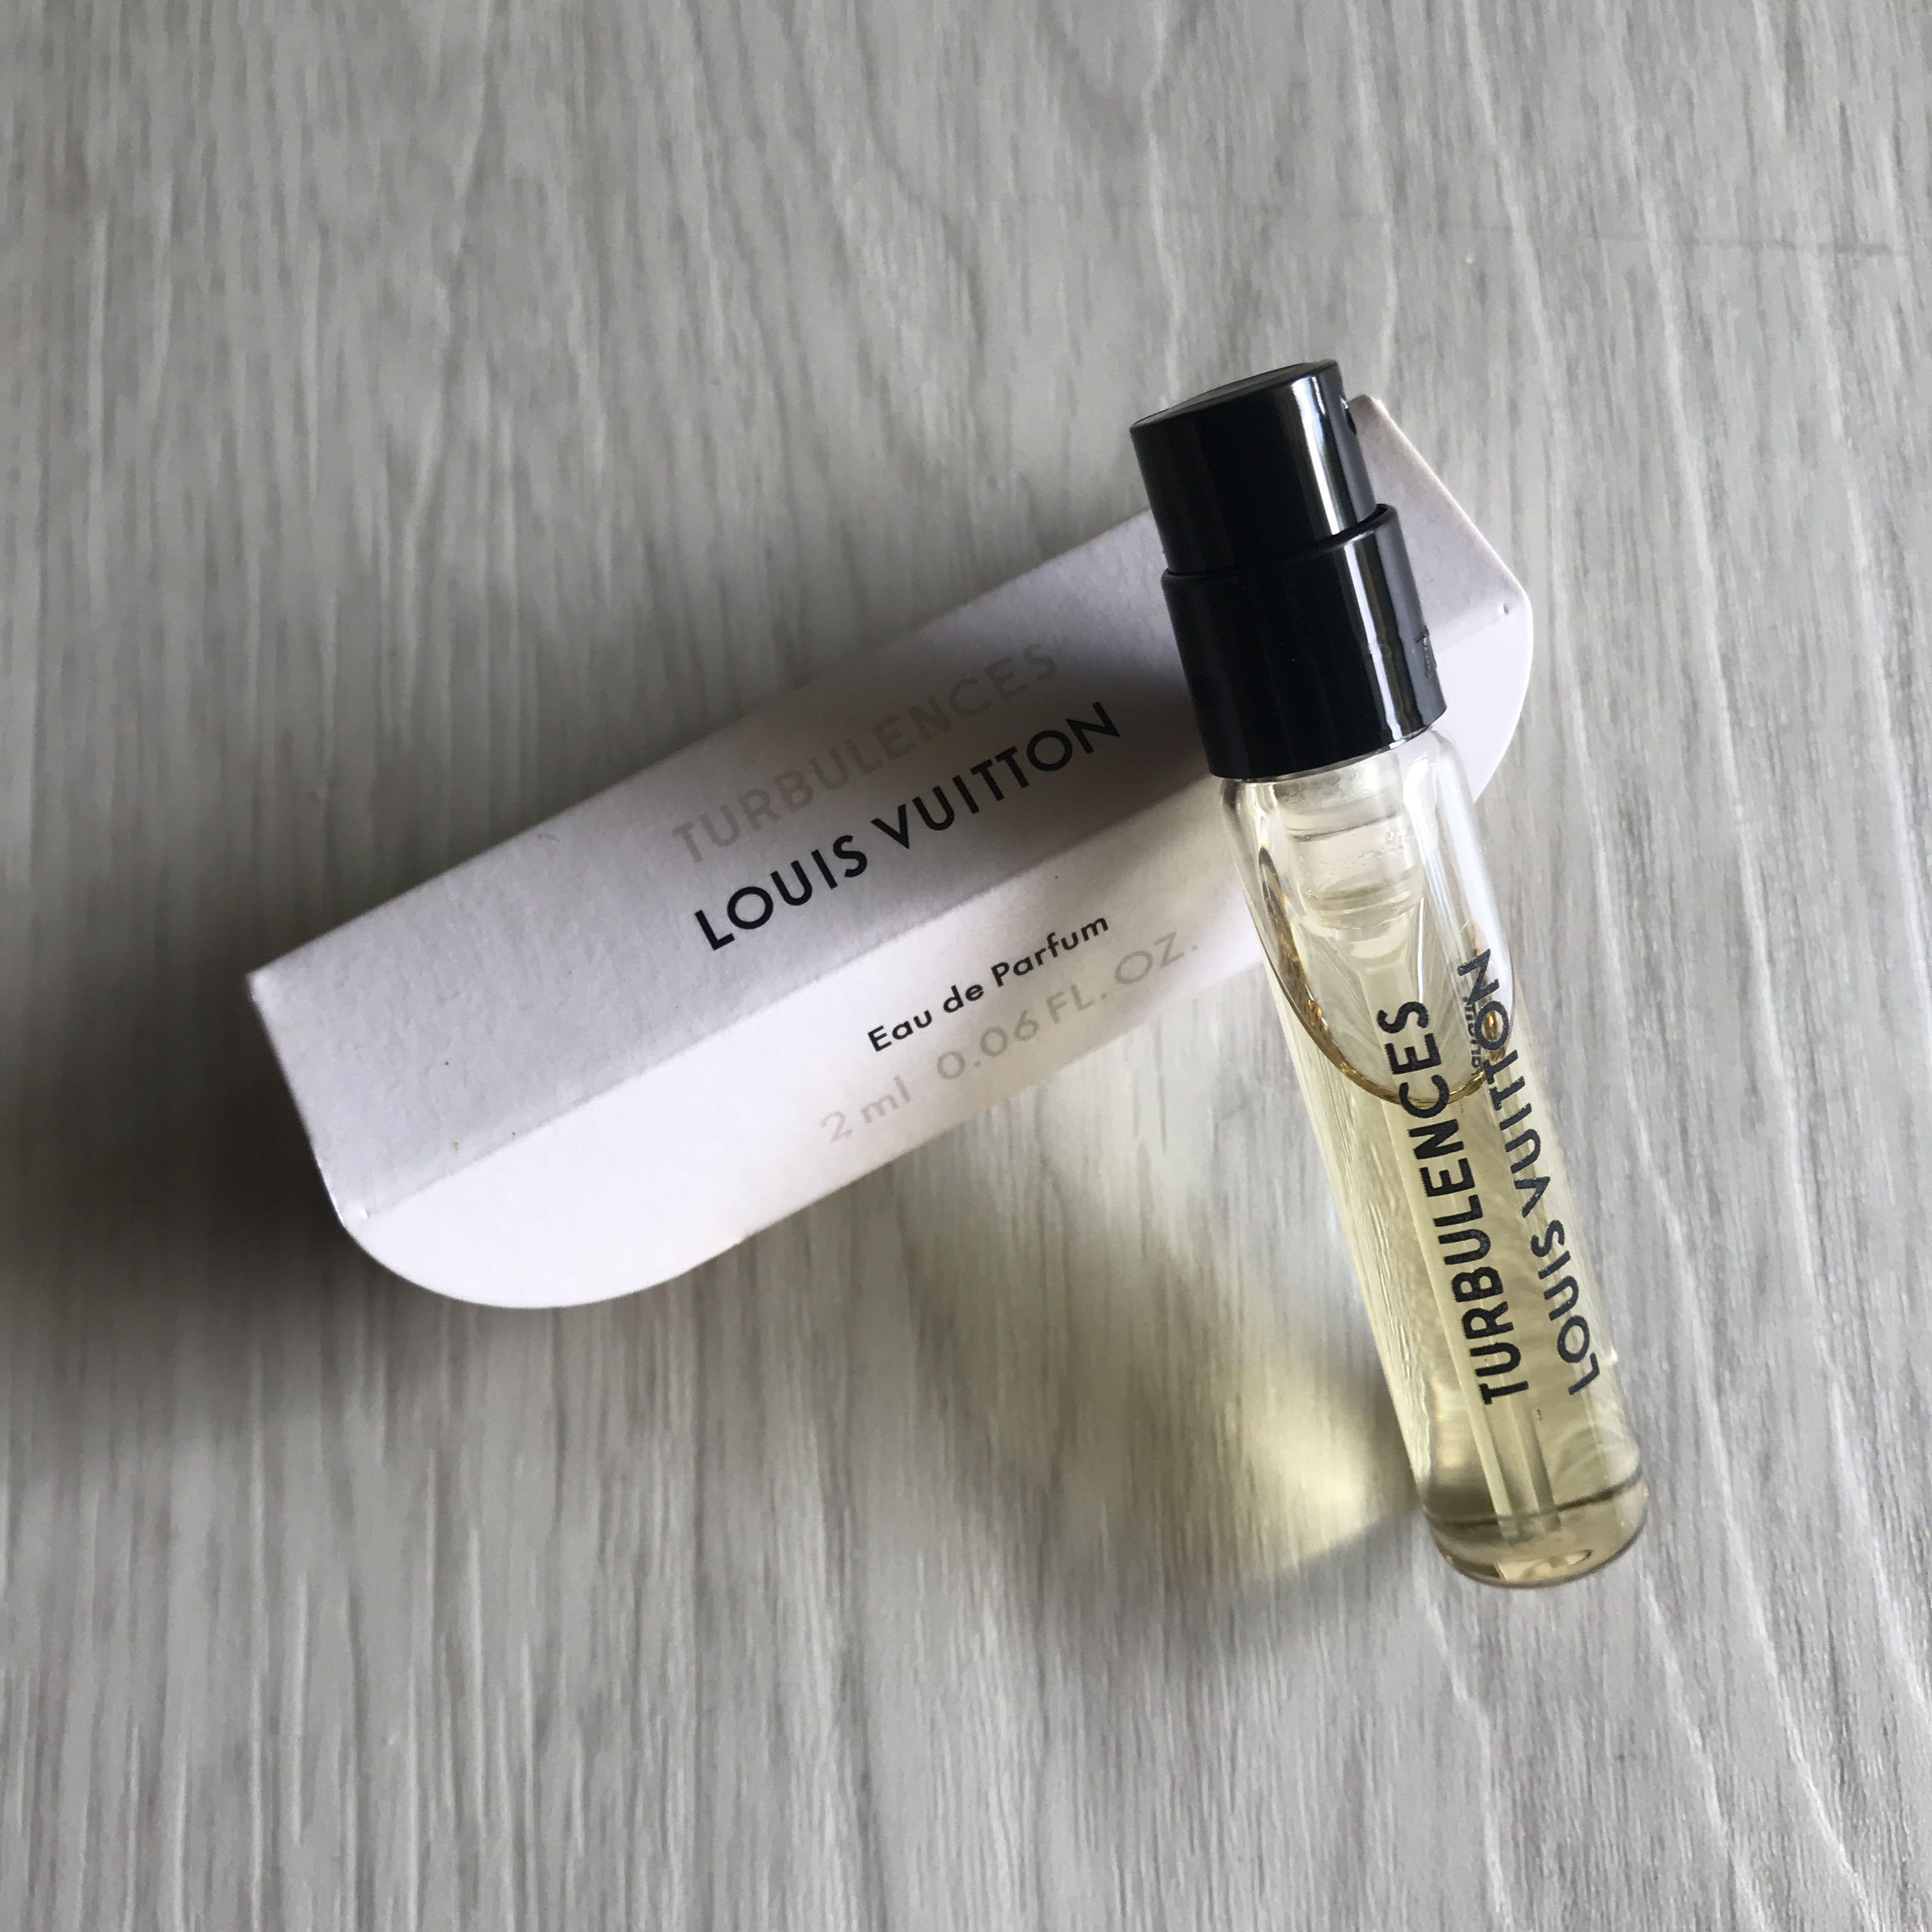 Louis Vuitton fragrance samples set of three 2ml 0.06 fl oz each for